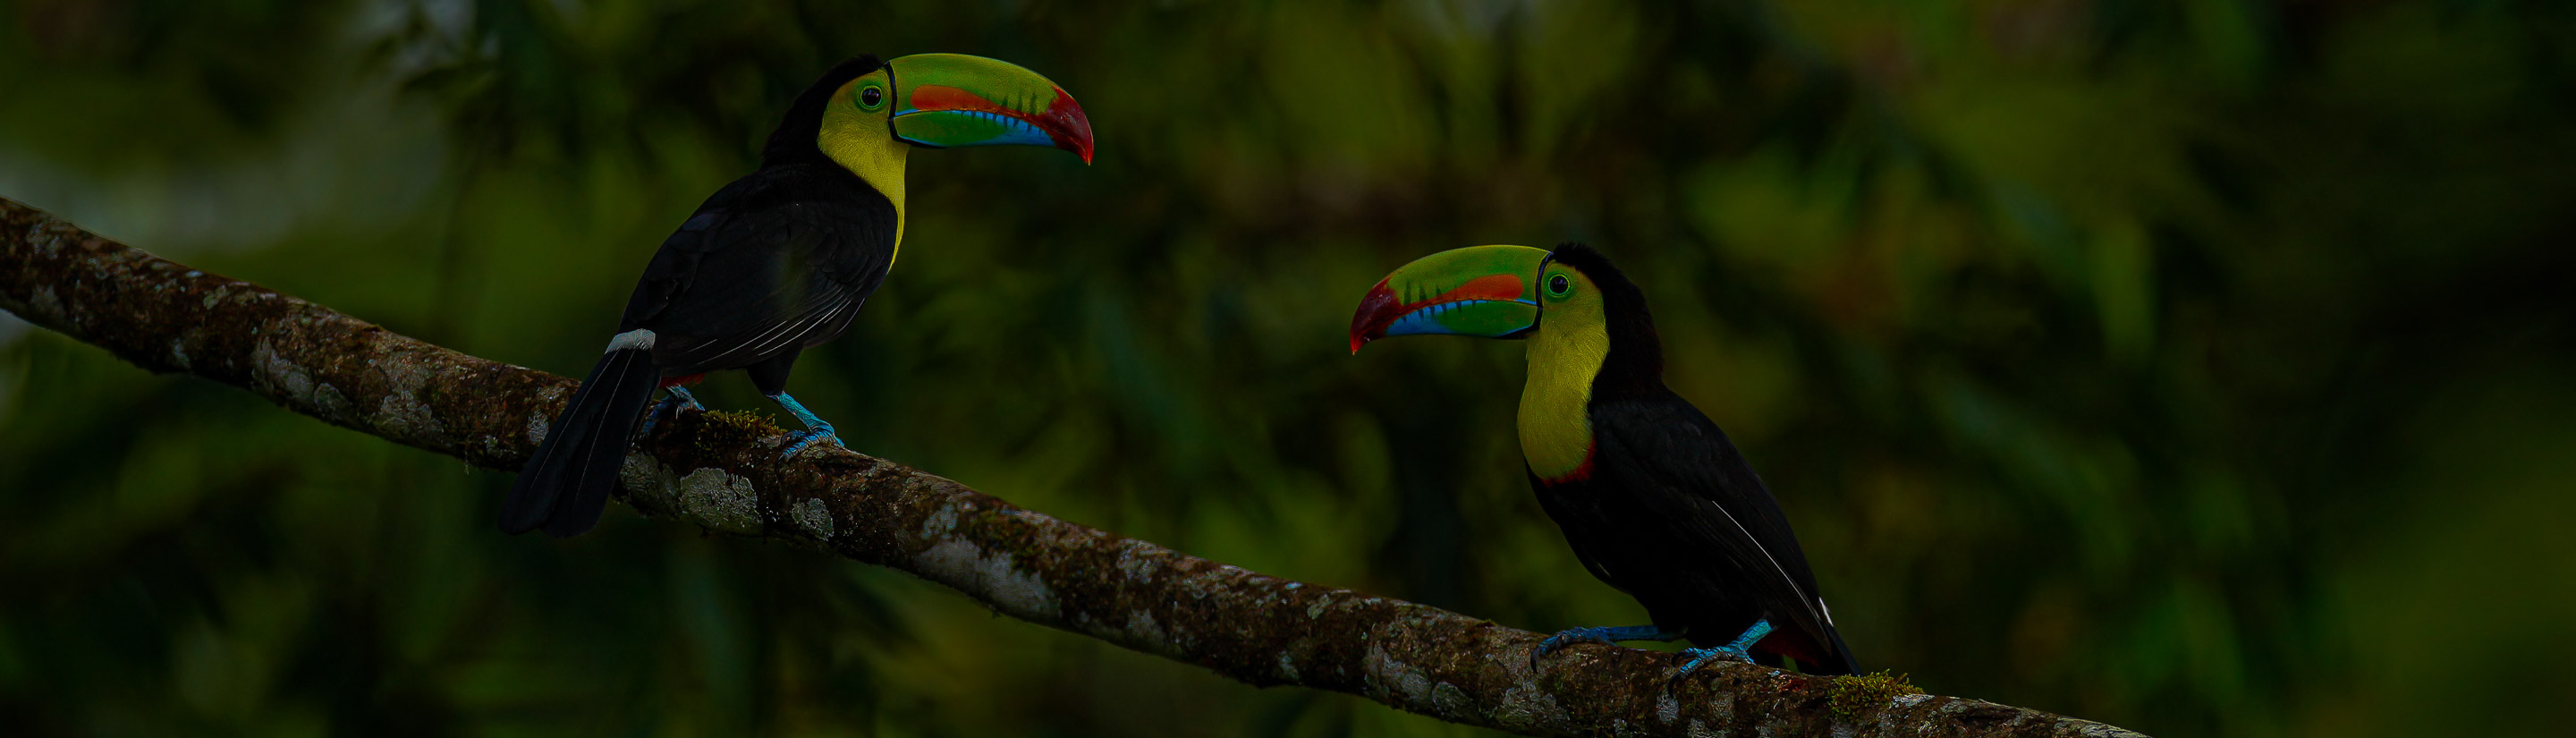 Zwei Tukane in Grünen Bäumen in Costa Rica.